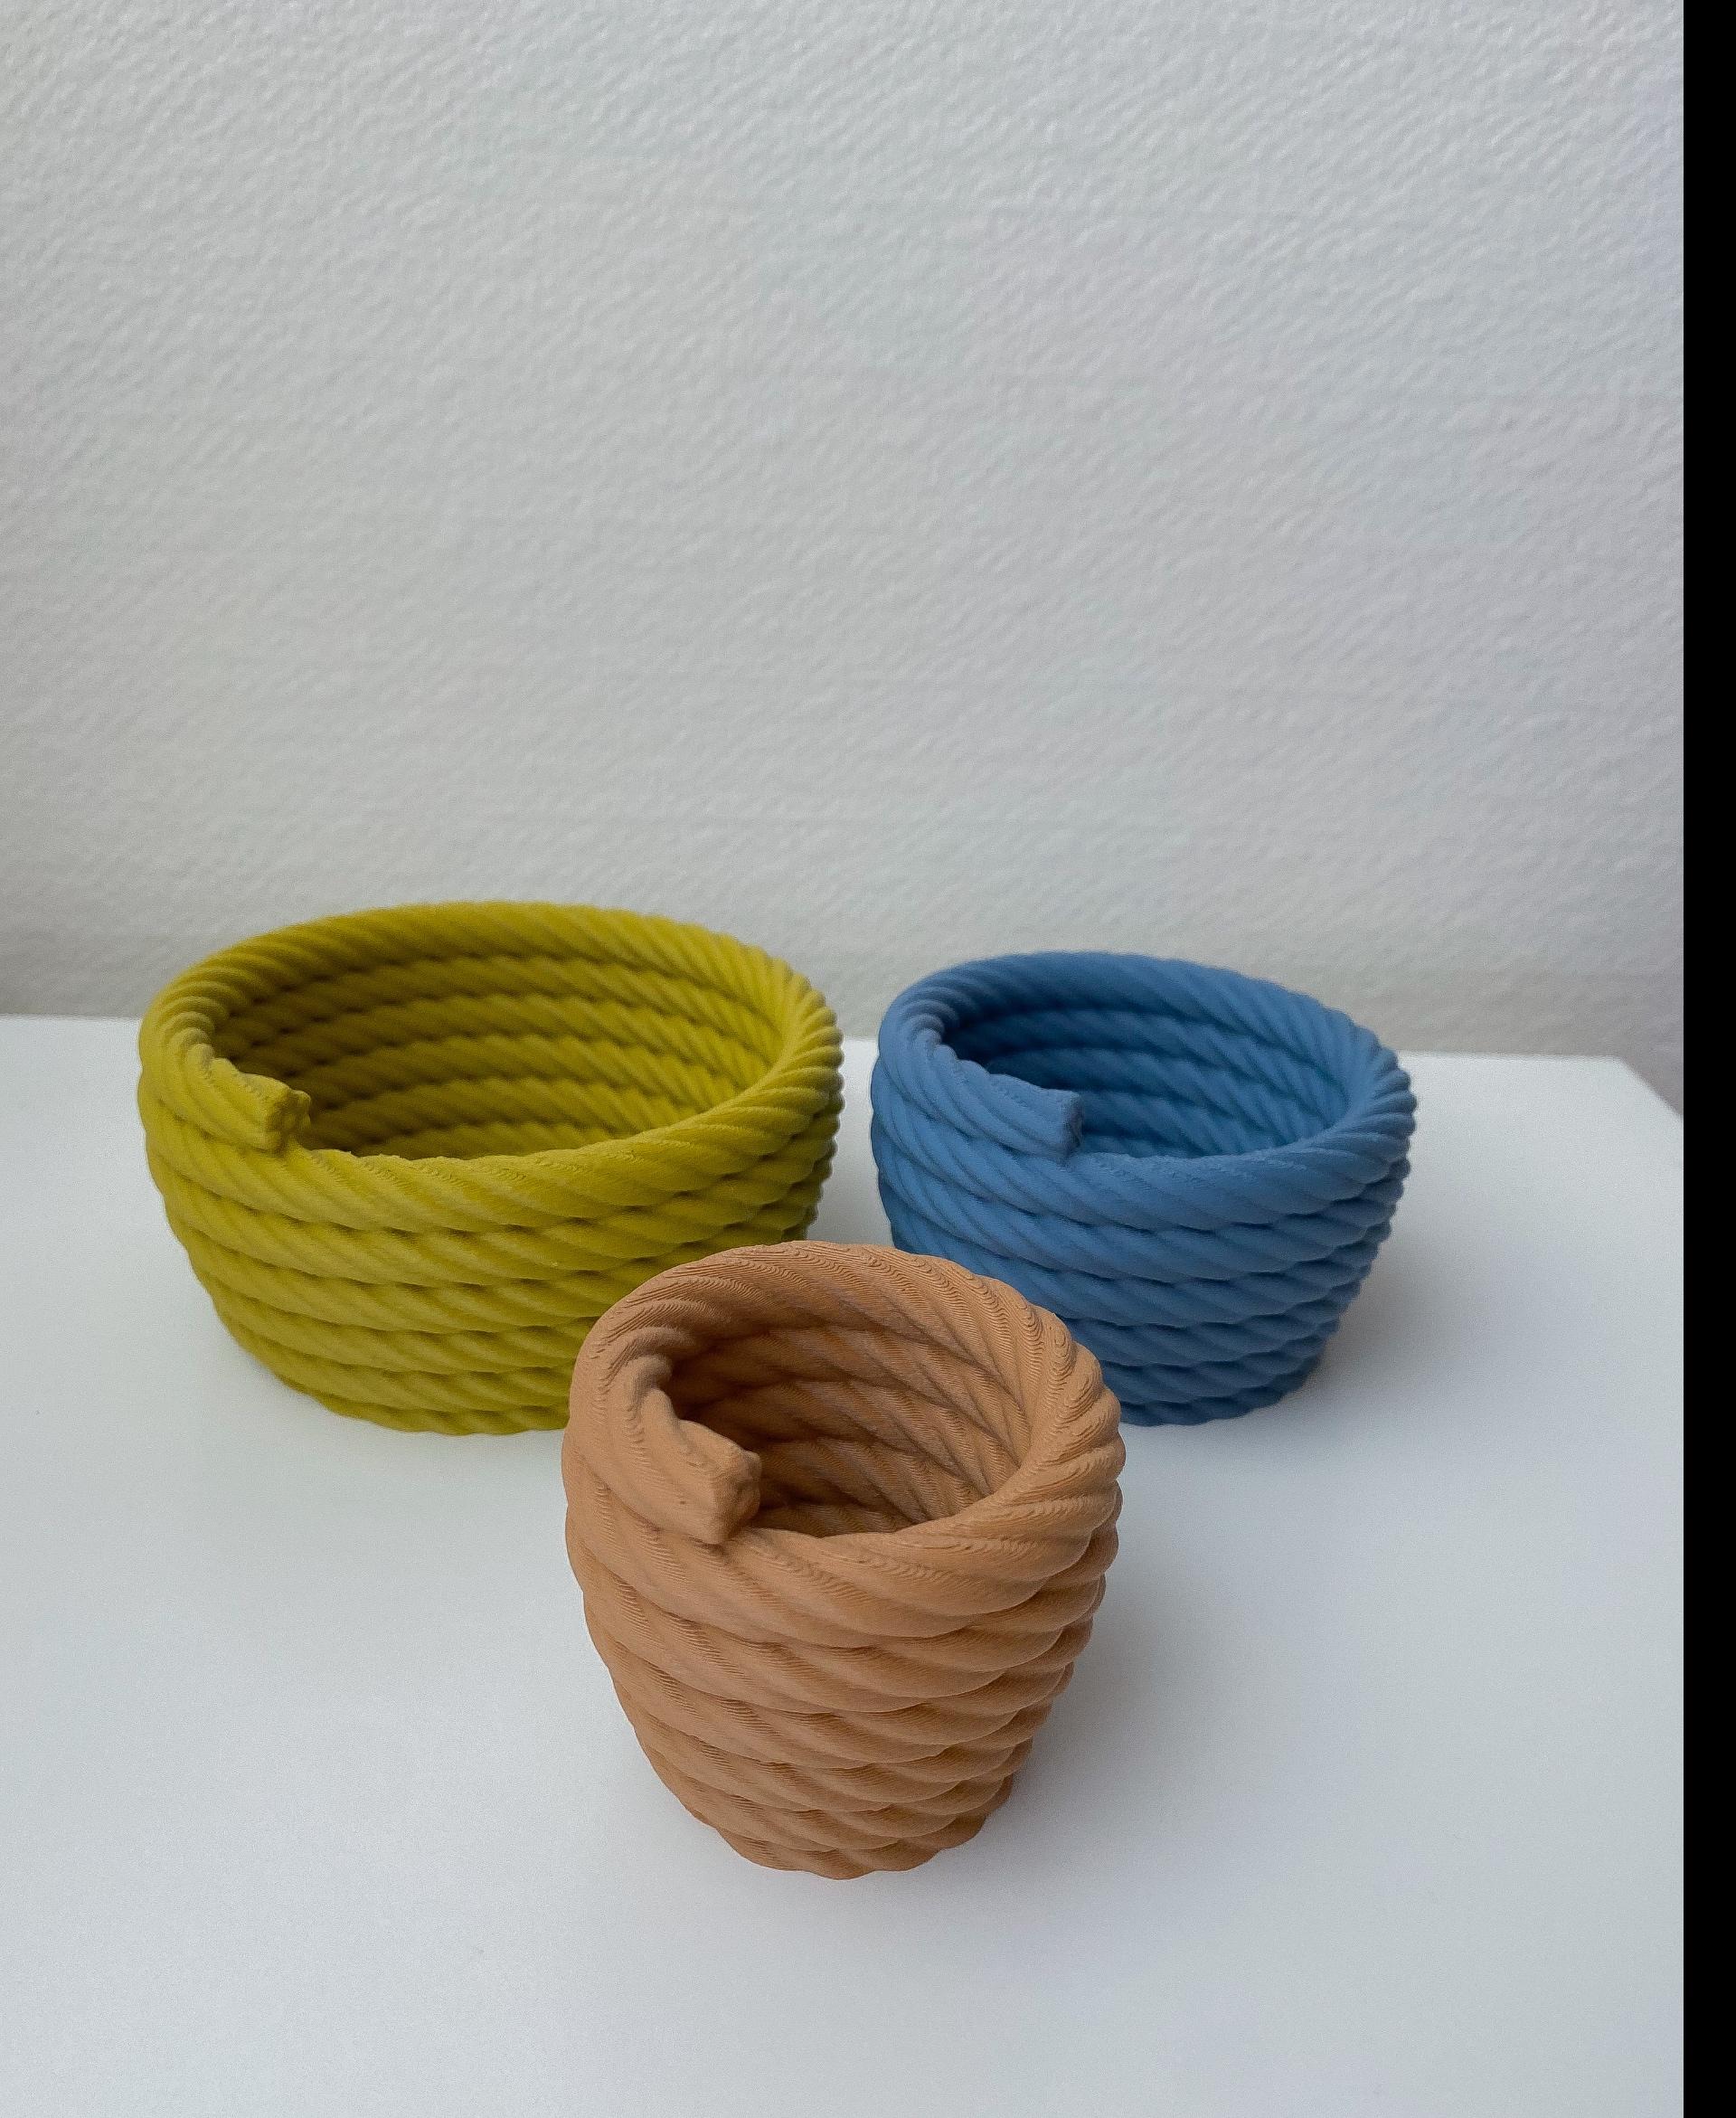 Nesting Rope Bowl (Medium) - Cute color combo.
Polymaker filament - 3d model